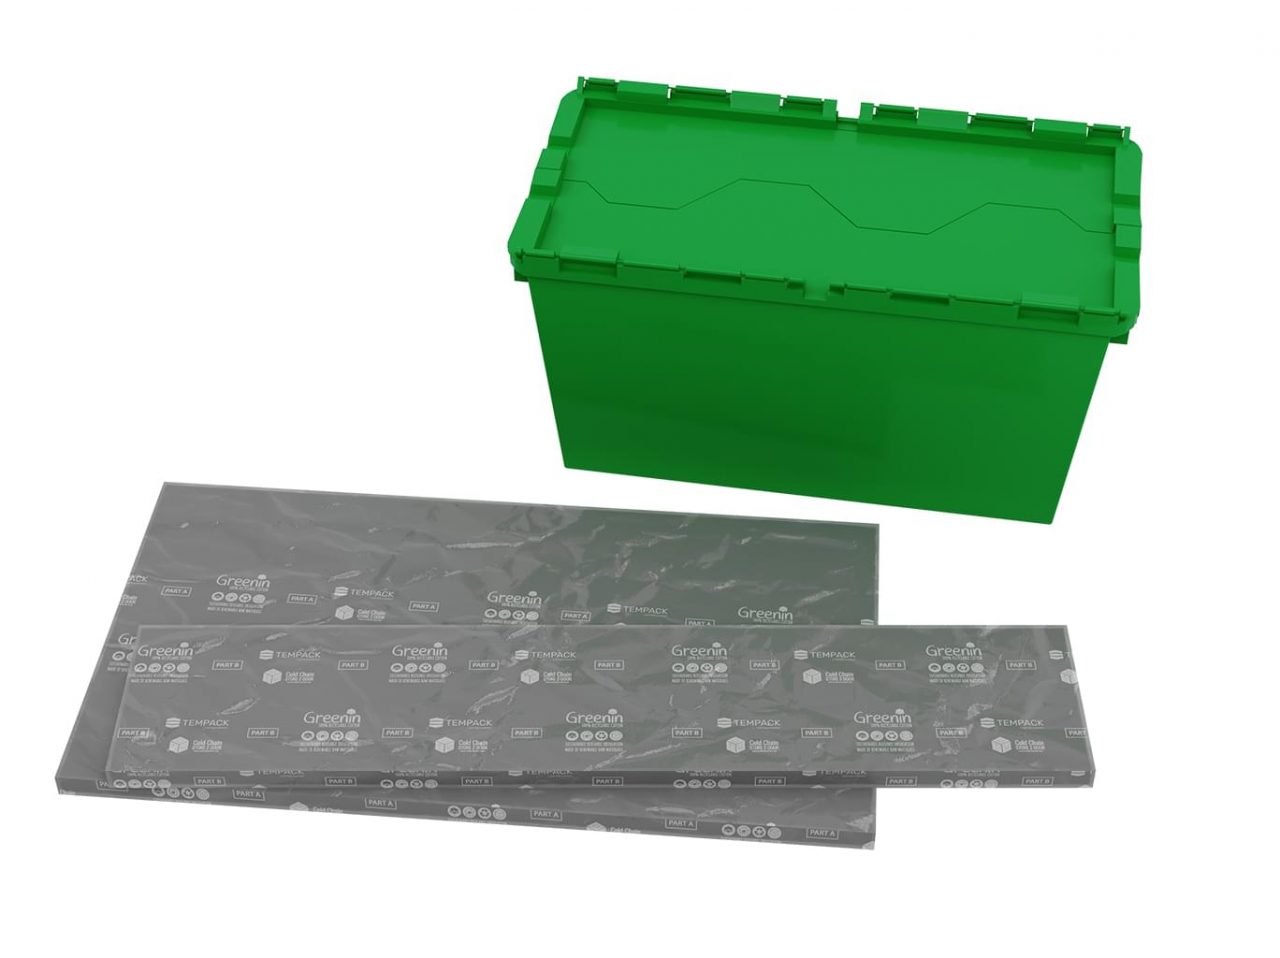 tempack-greenin-ru-sustainable-insulated-packaging-1@2x-1280x958